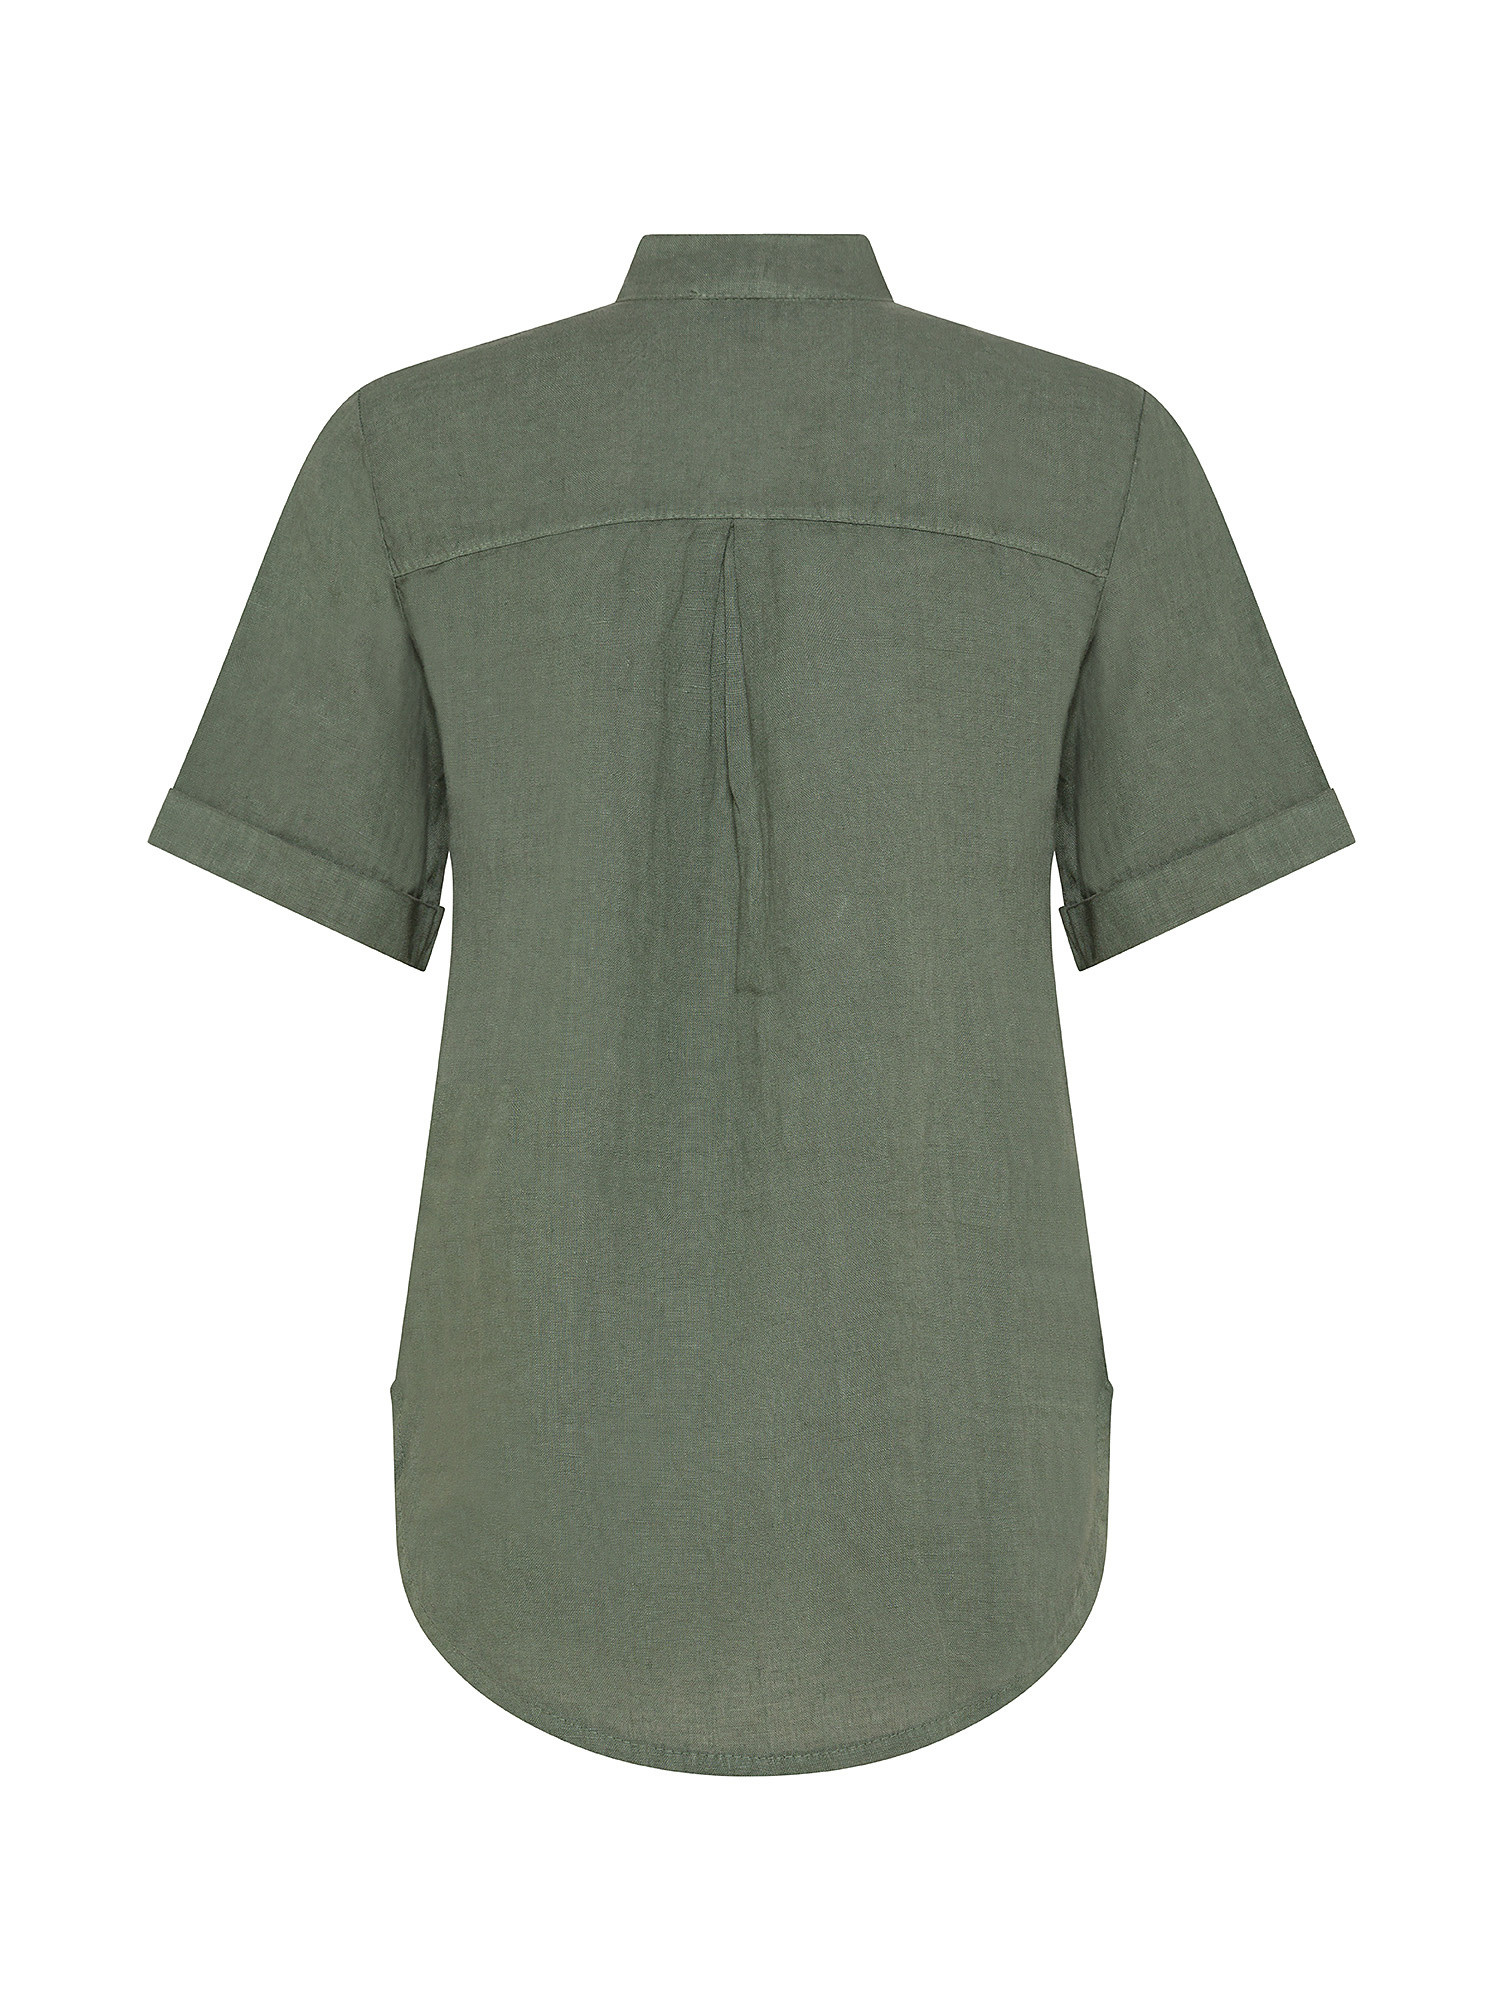 Koan - Linen blouse with mandarin collar, Dark Green, large image number 1